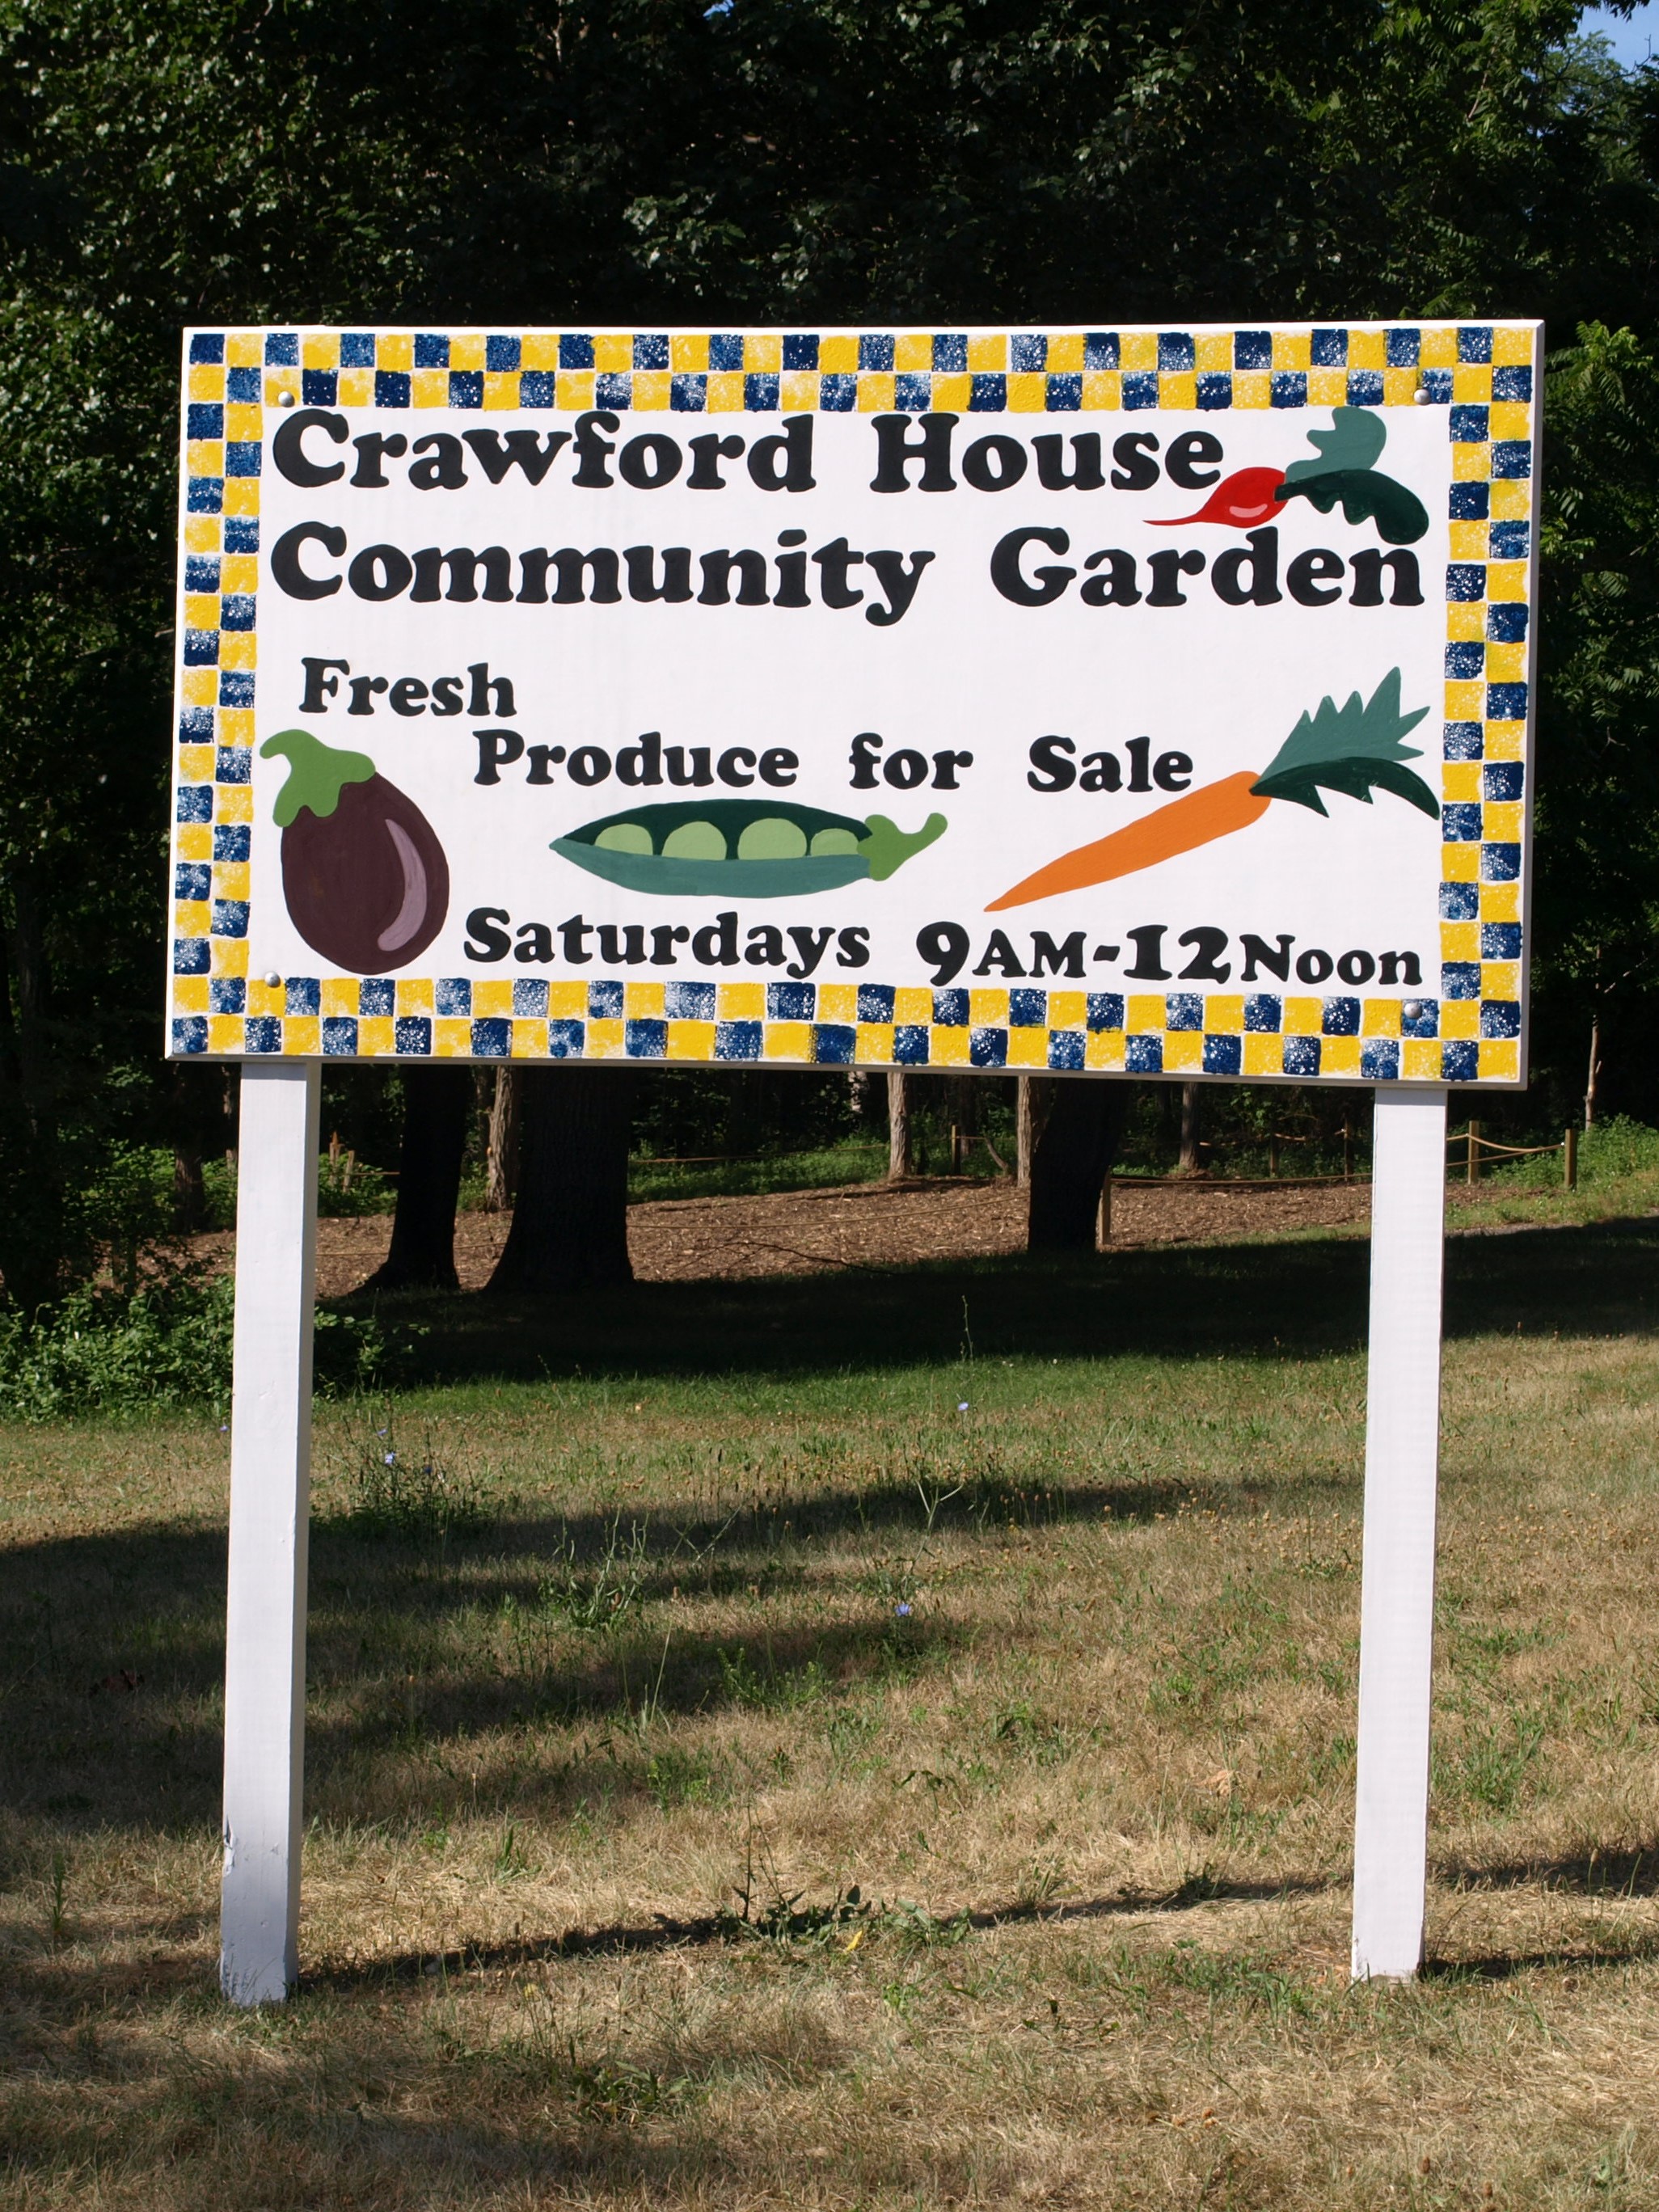 Crawford House Community Garden: Fresh Produce for Sale on Saturdays 9am-12 noon